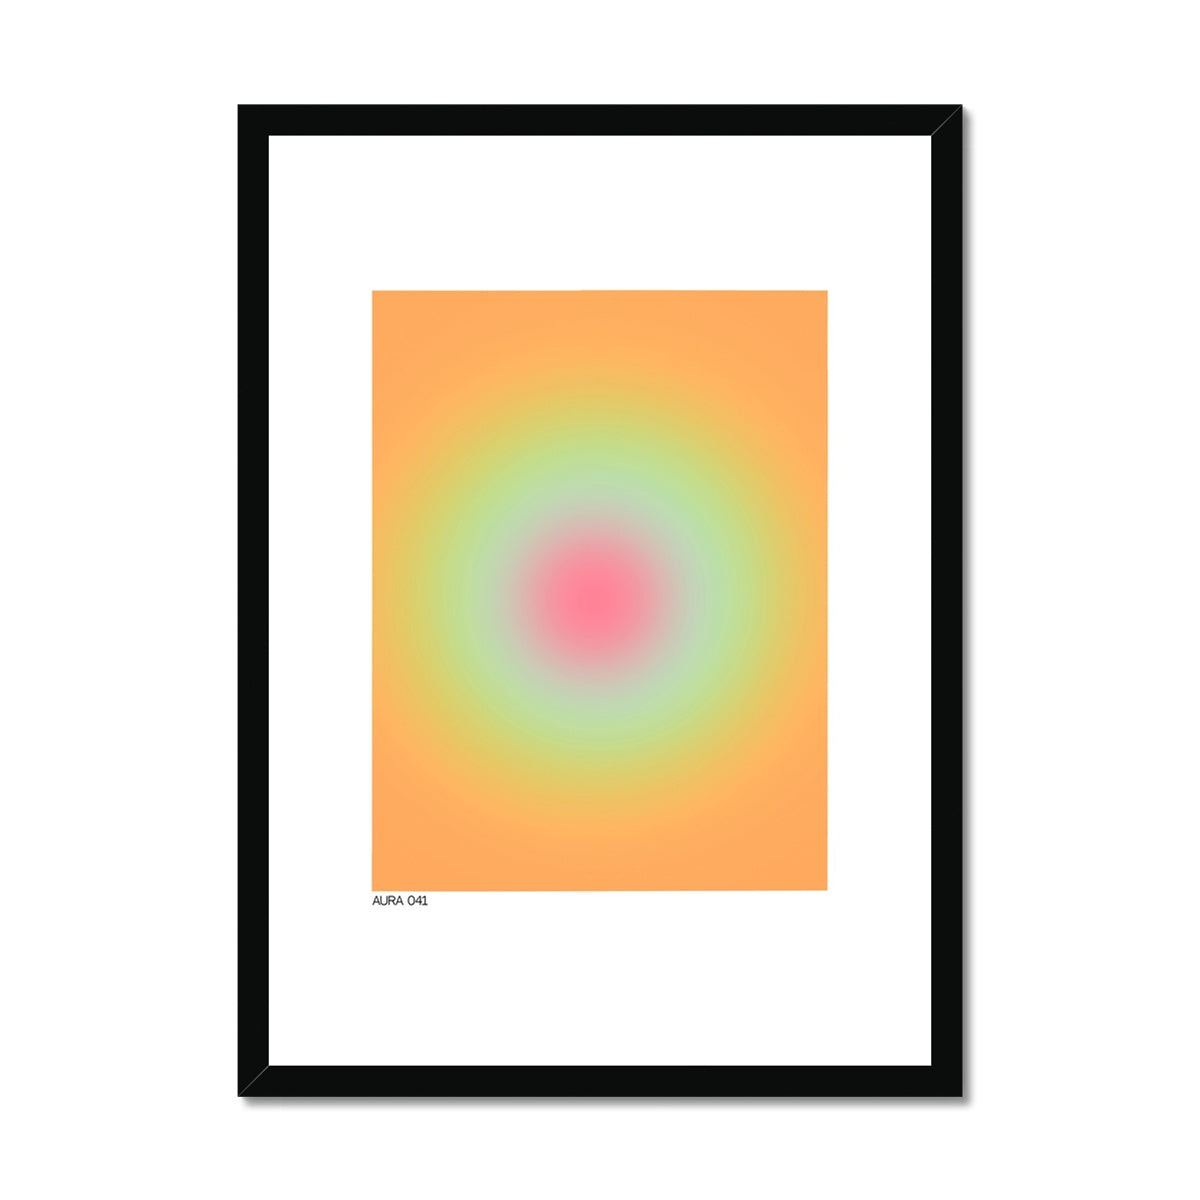 aura 041 Framed & Mounted Print